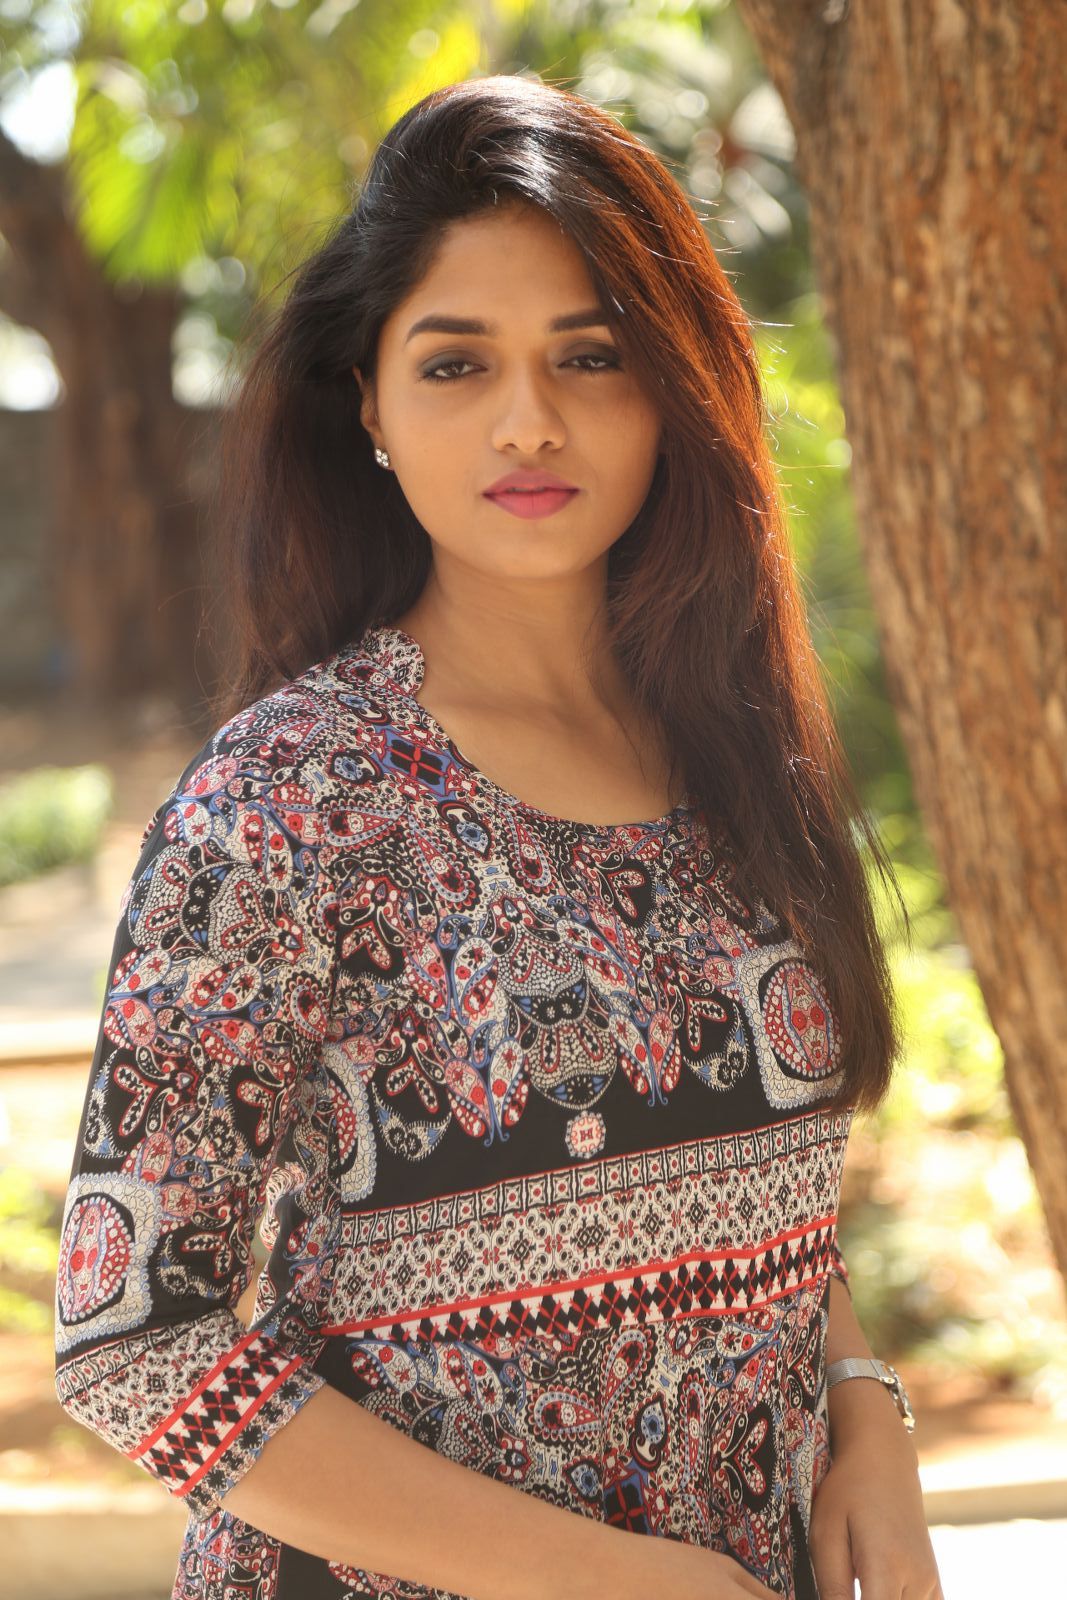 Brand New Photo Stills Of Beautiful Actress Sunayana | Cinema Brand New Photo Stills Of Beautiful Actress Sunayana | Cinema Sunayana 42 Copy